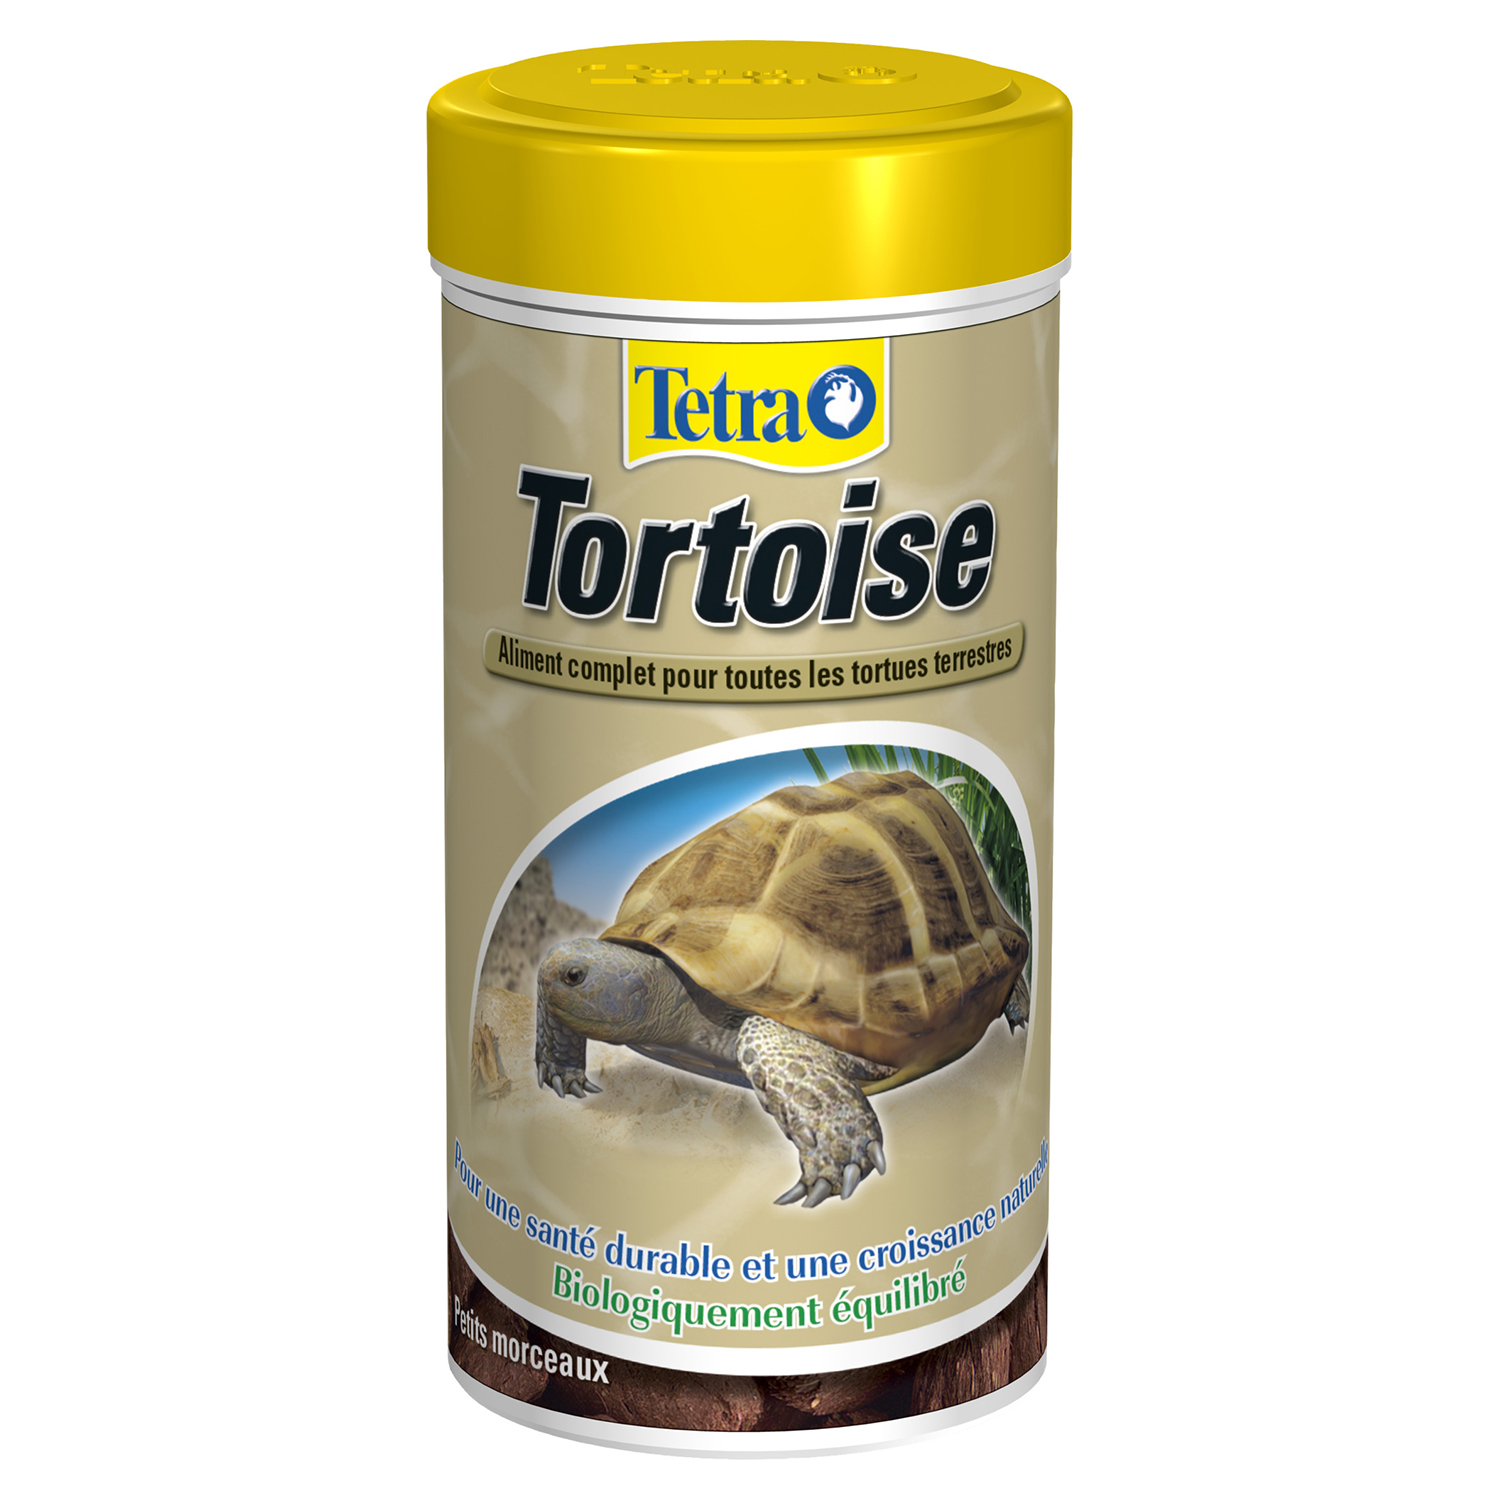  Tetra Tortoise, корм для сухопутных черепах